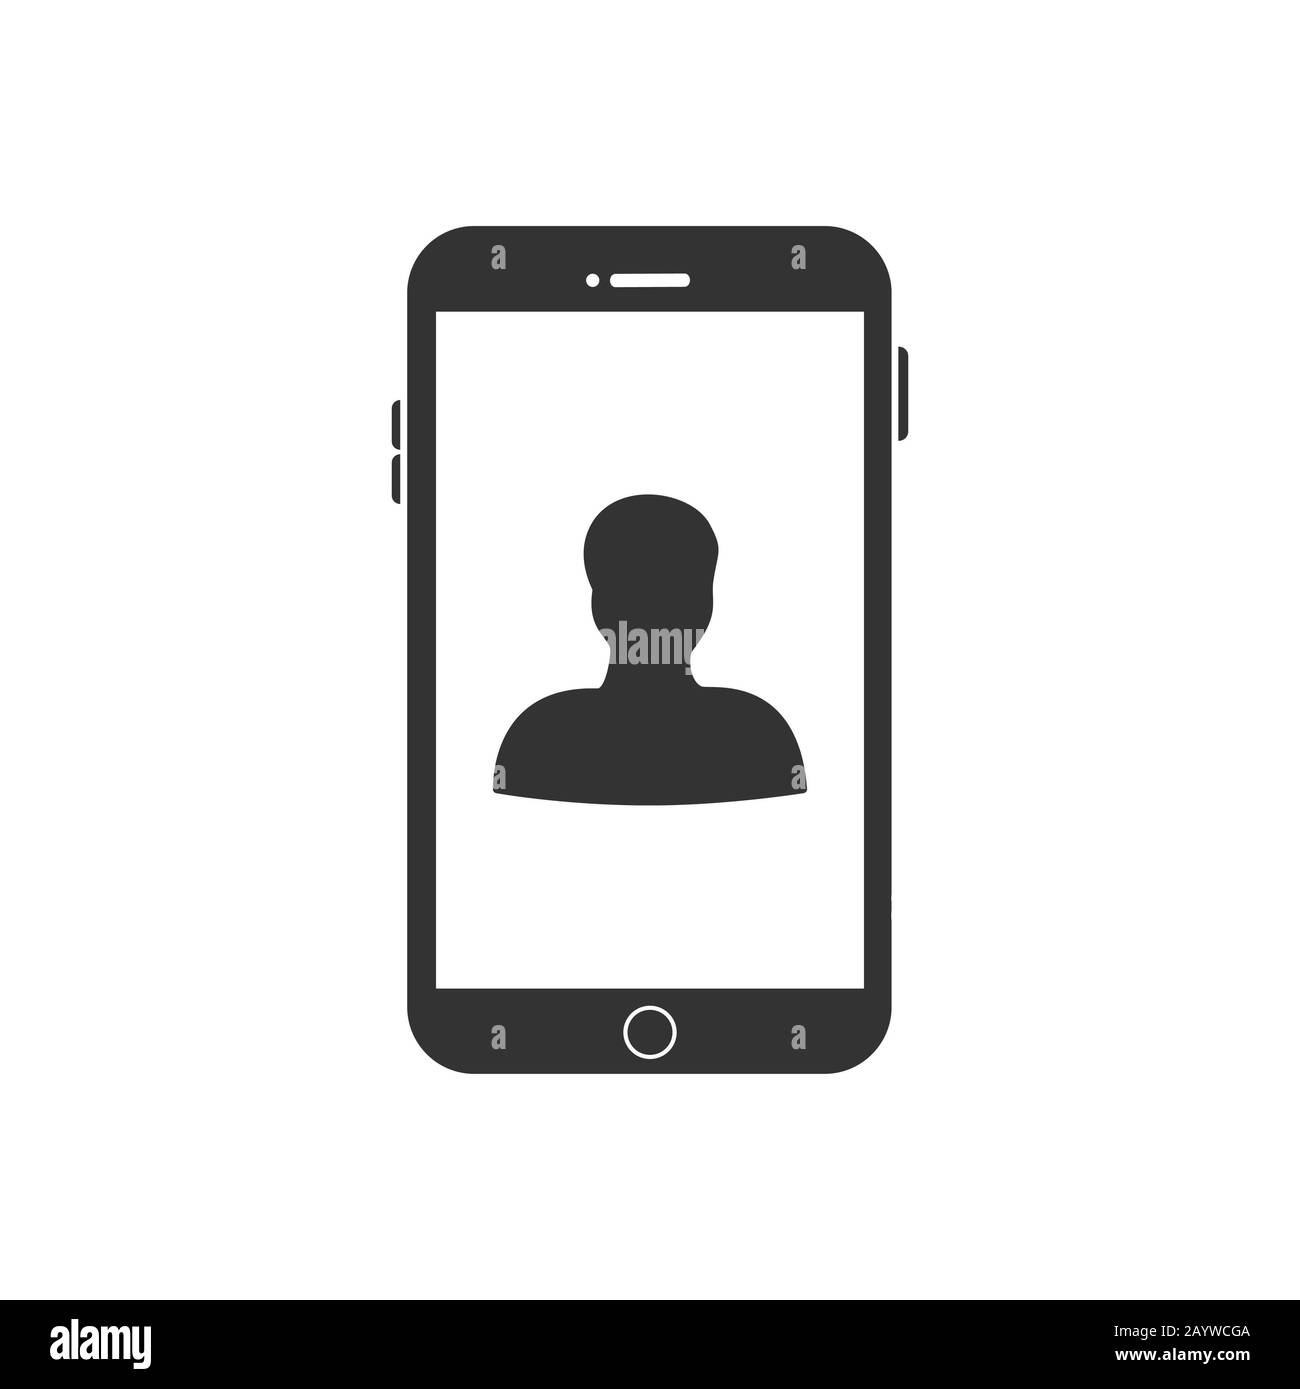 Smart-Phone User Icon - Person Profile Avatar Sign of Human Symbol glyph Vector illustration Stock Photo